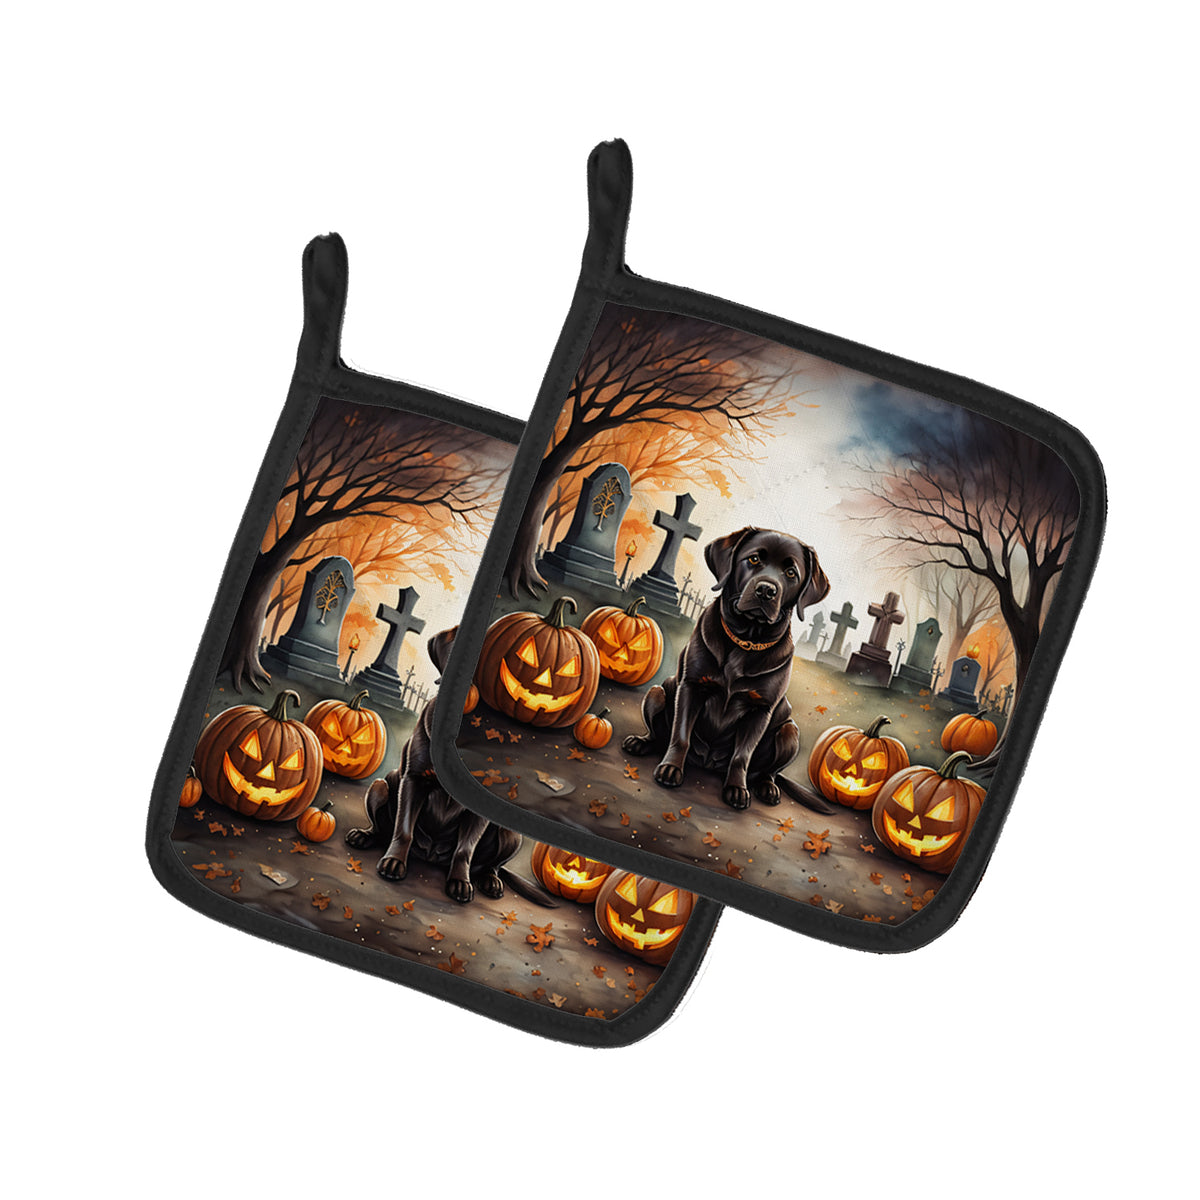 Buy this Chocolate Labrador Retriever Spooky Halloween Pair of Pot Holders